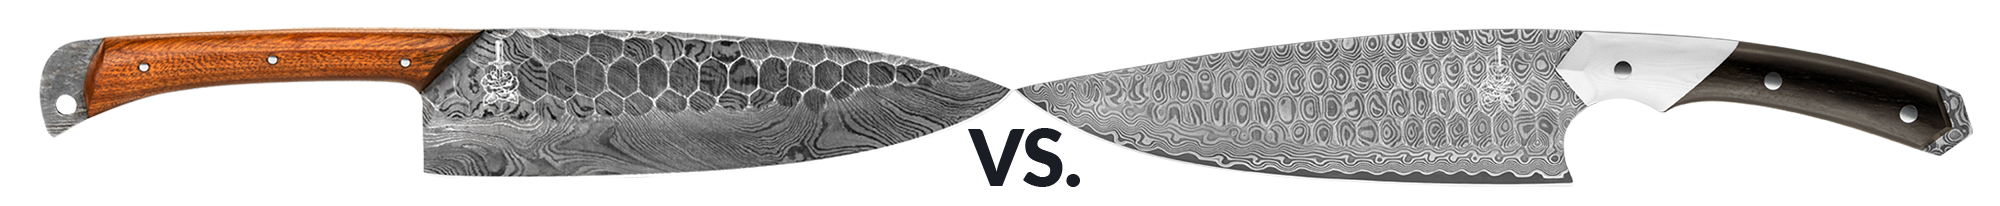 folded steel high carbon vs stainless steel